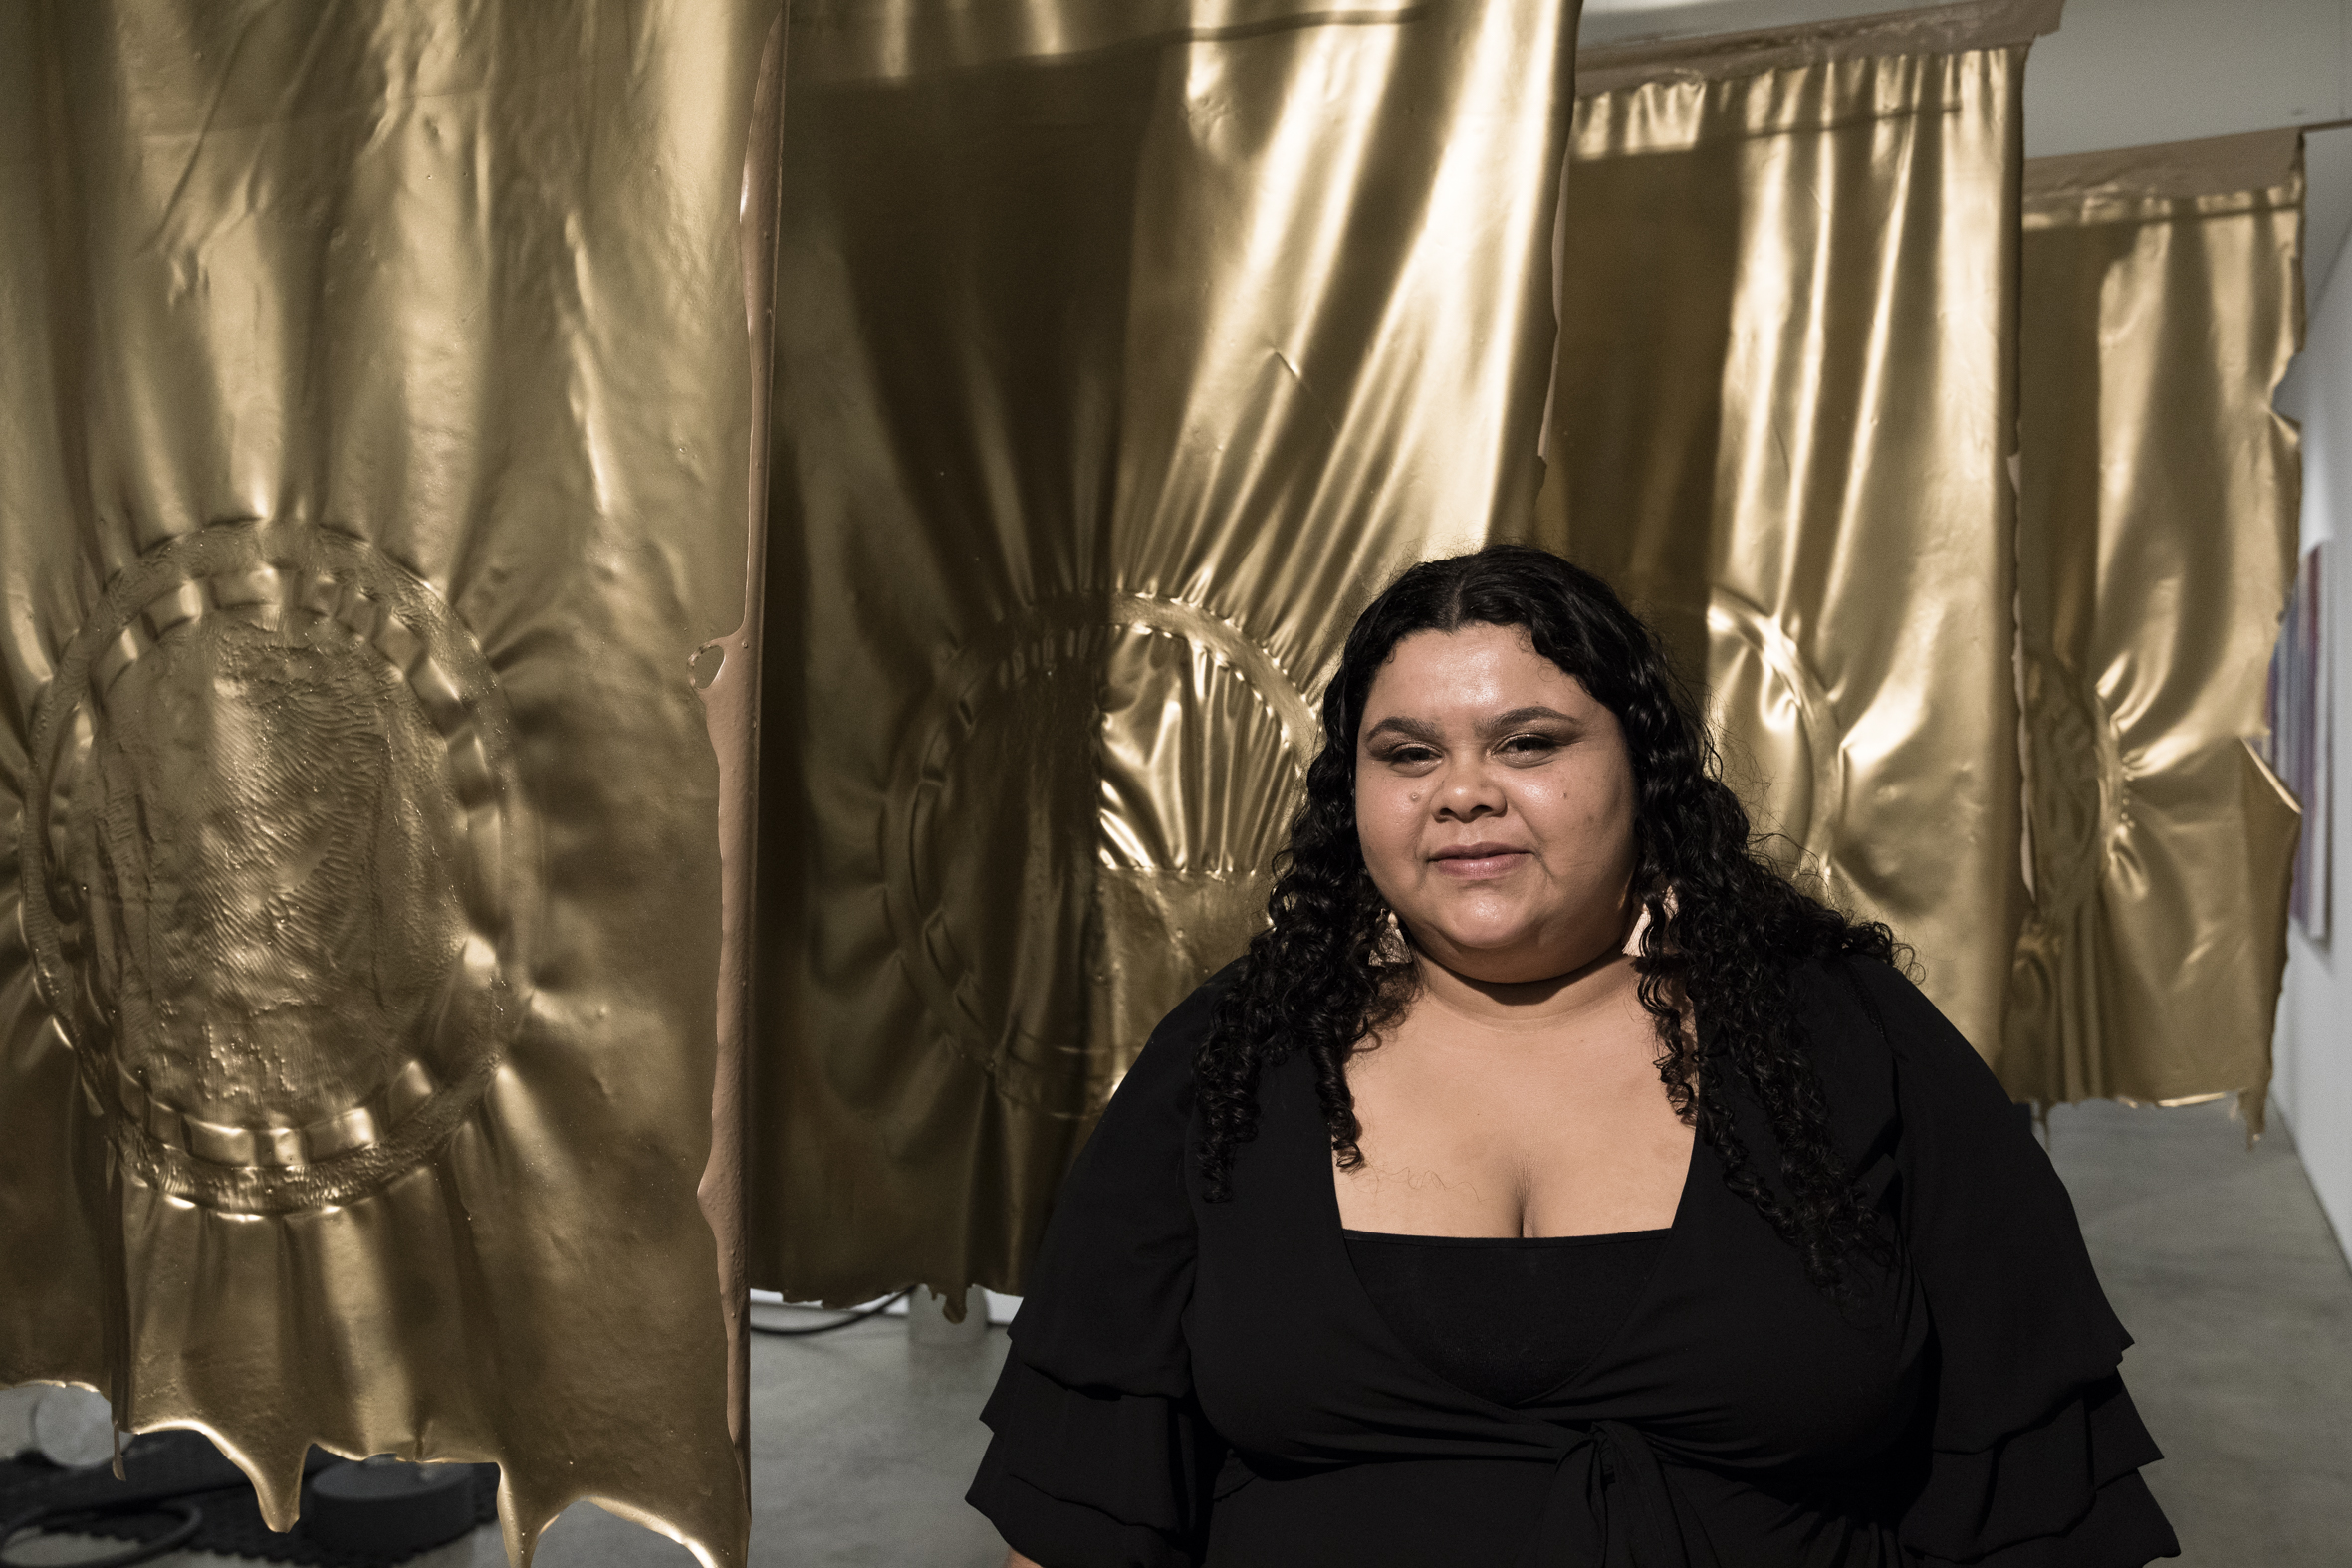 Graduate Carmen Glynn-Braun with her prize-winning work Untitled 2018. Photo: Silver Salt Photography